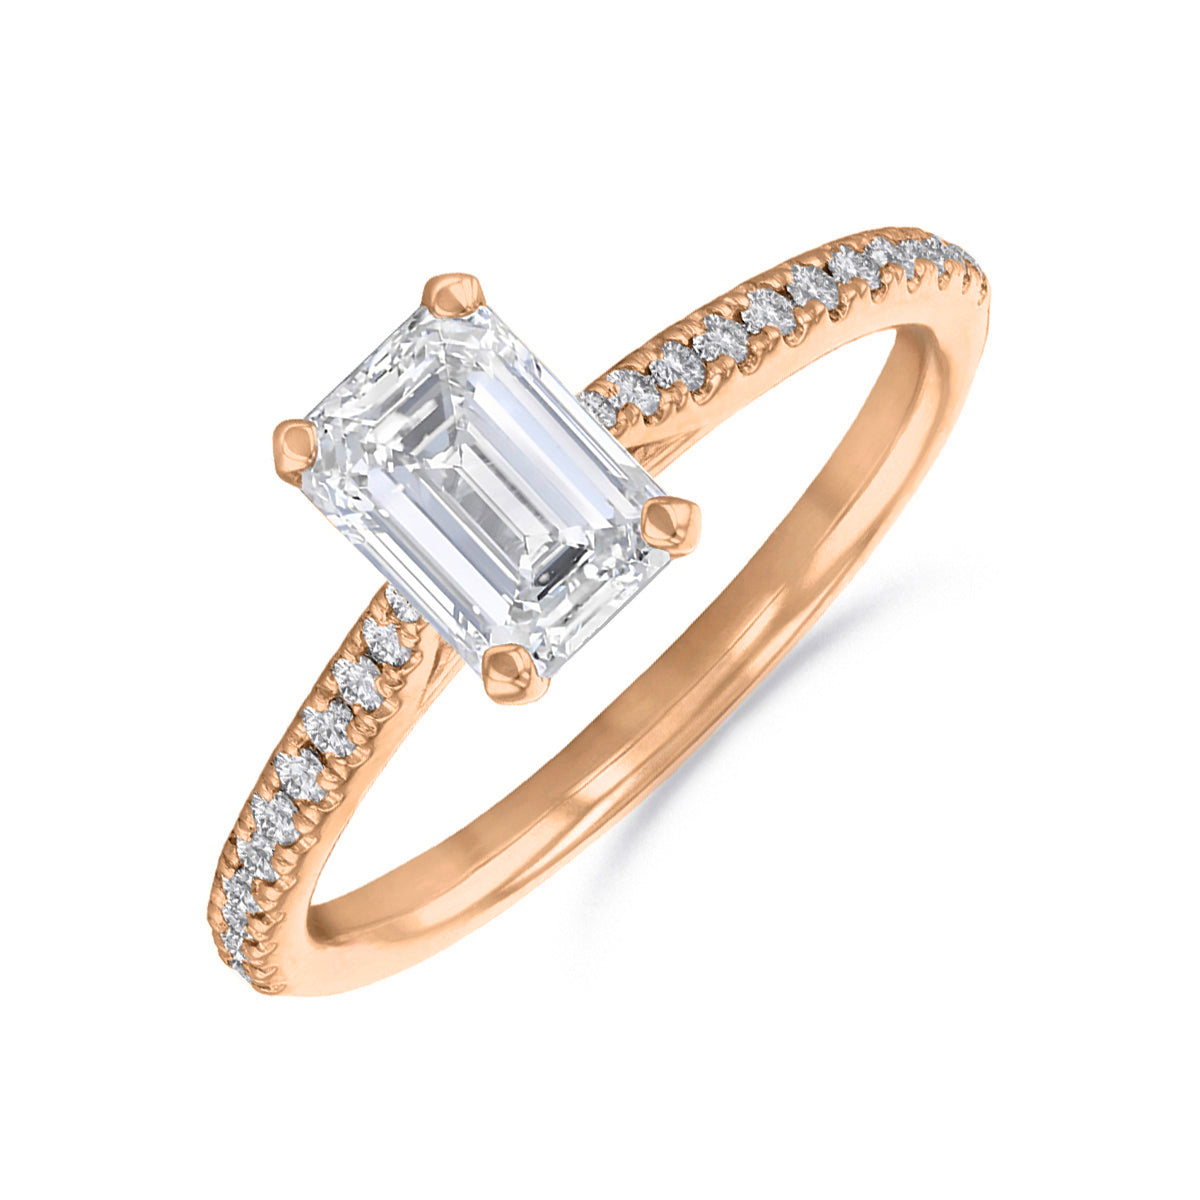 1-50ct-ophelia-shoulder-set-emerald-cut-solitaire-diamond-engagement-ring-18ct-rose-gold